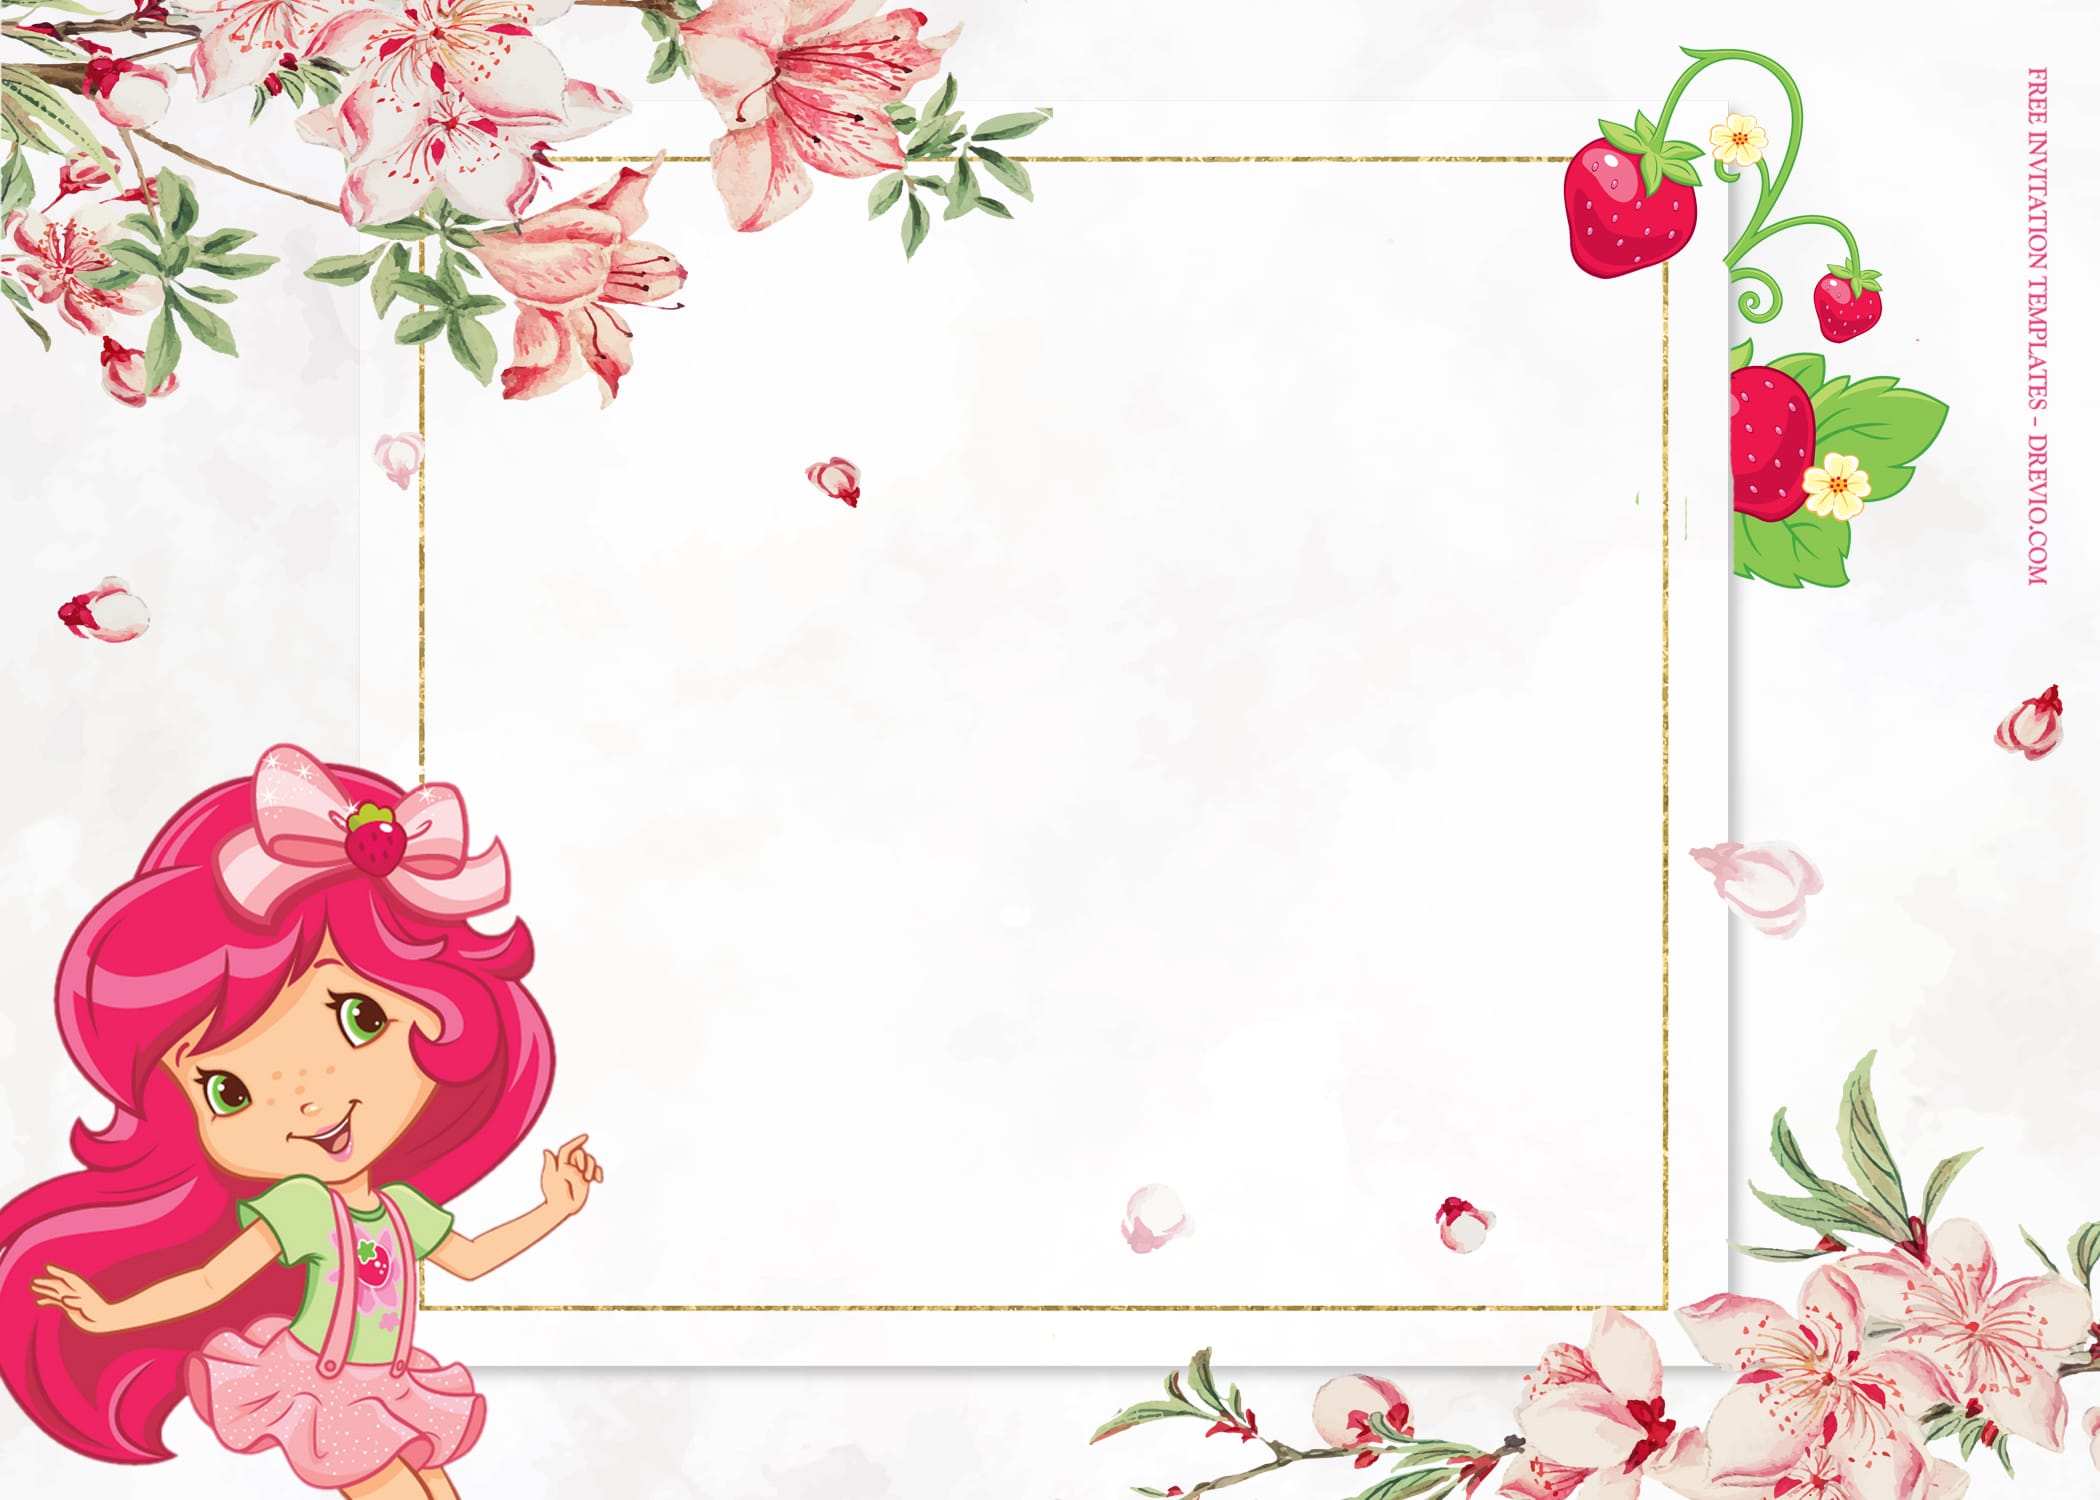 8+ Strawberry Shortcake With Sakura Blossom Birthday Invitation Templates Type Six